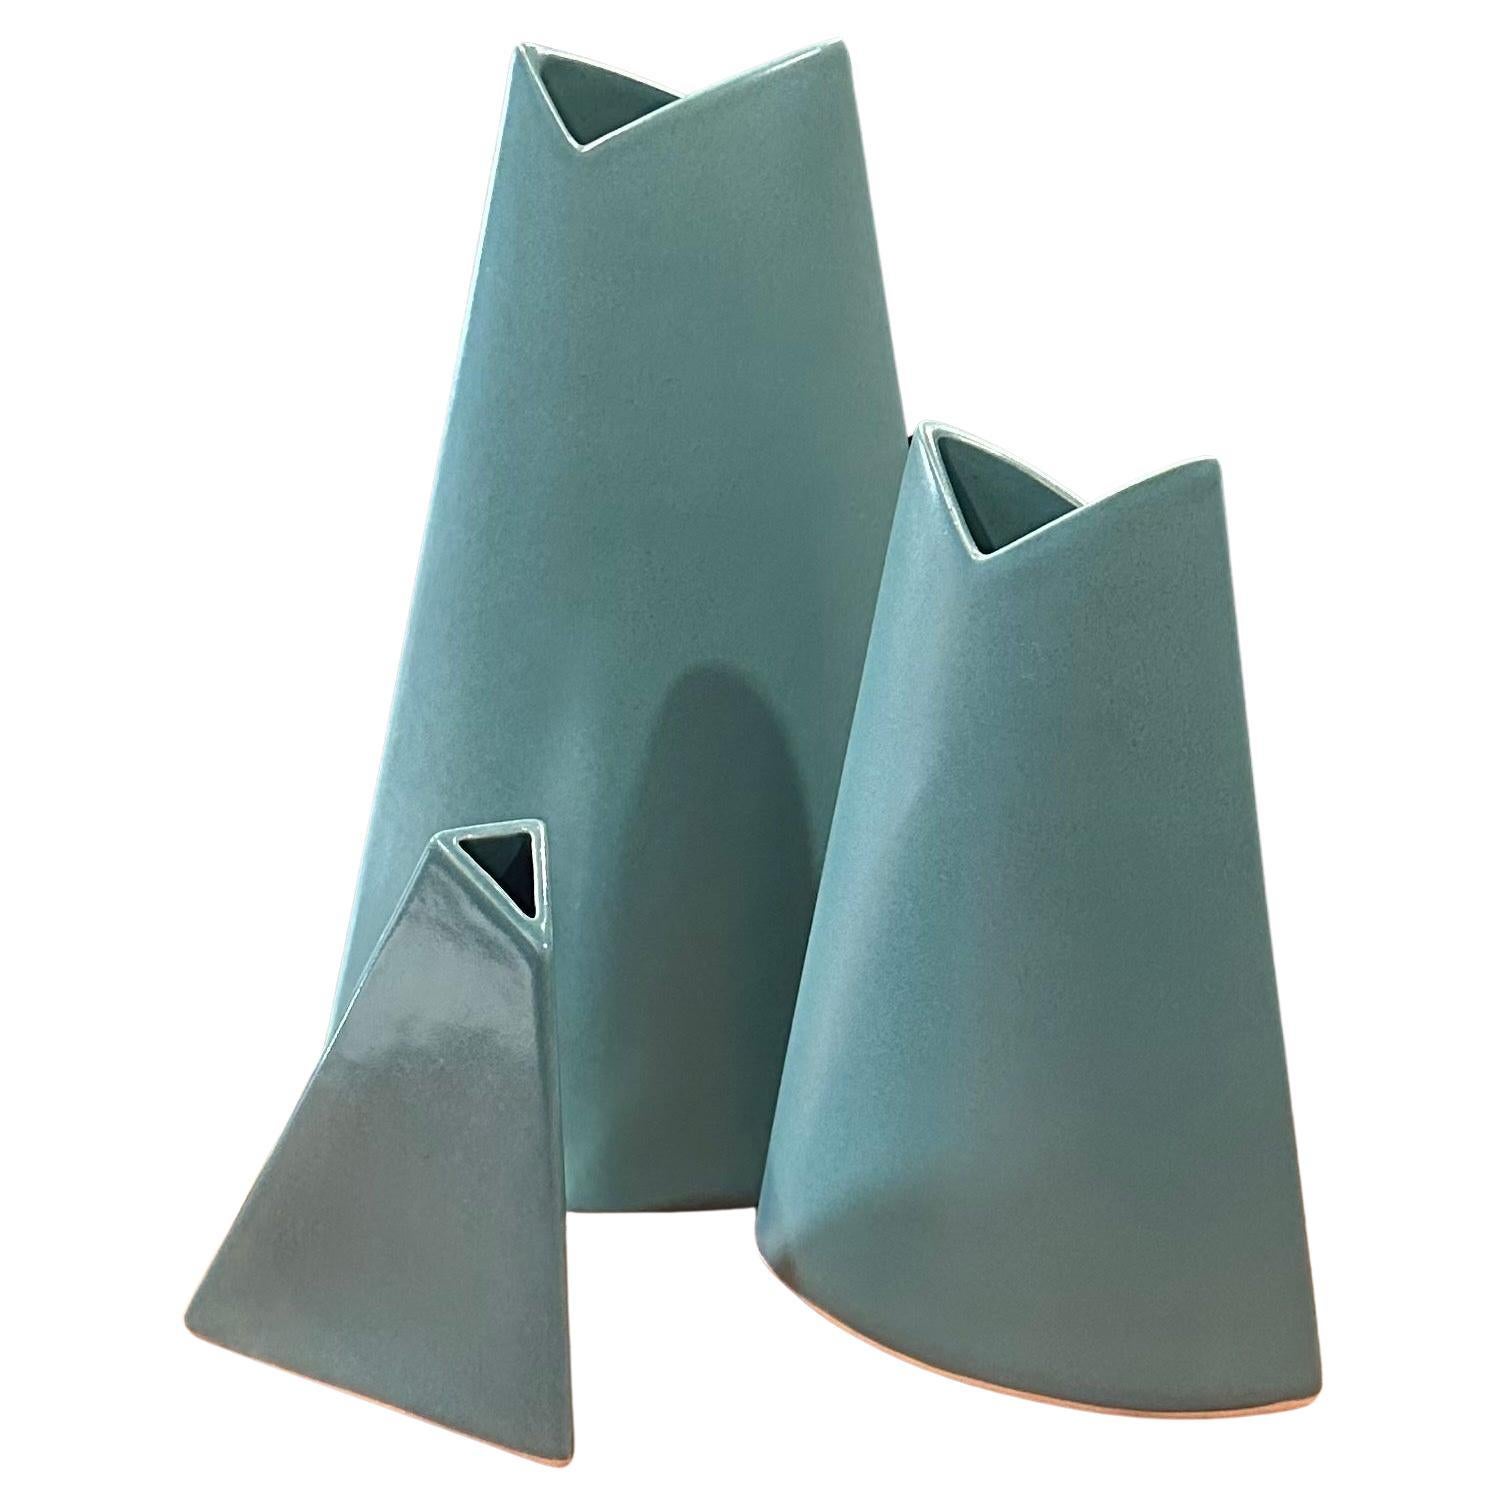 Set of Three Post-Modern Geometric Ceramic Vases by James Johnston For Sale 7